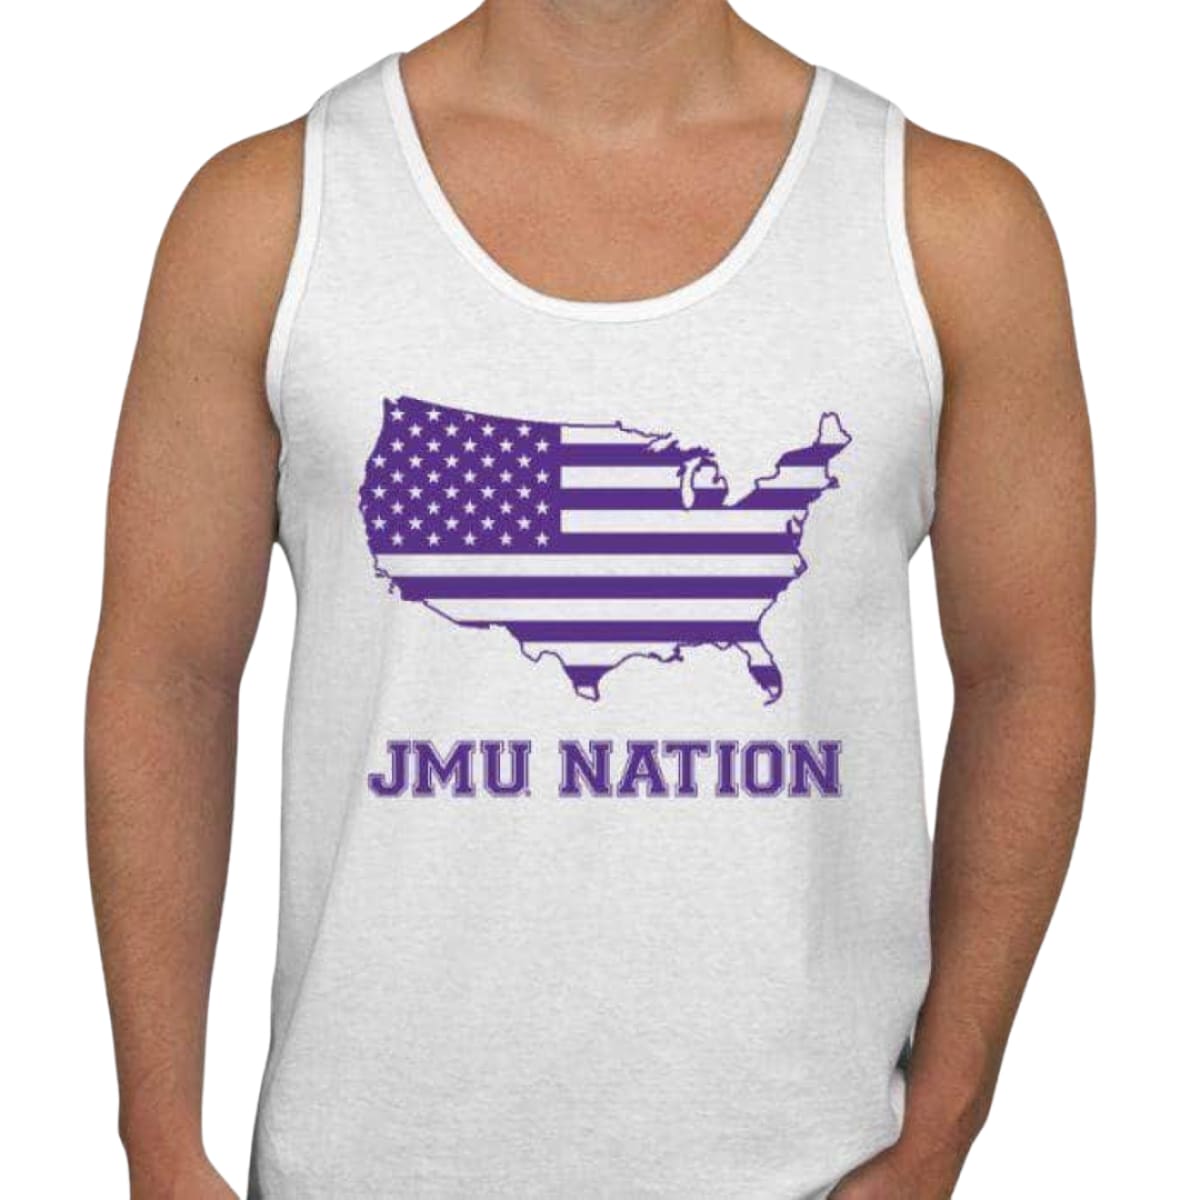 JMU Nation Men’s/Unisex Cotton Tank - S / WHITE W/PURPLE